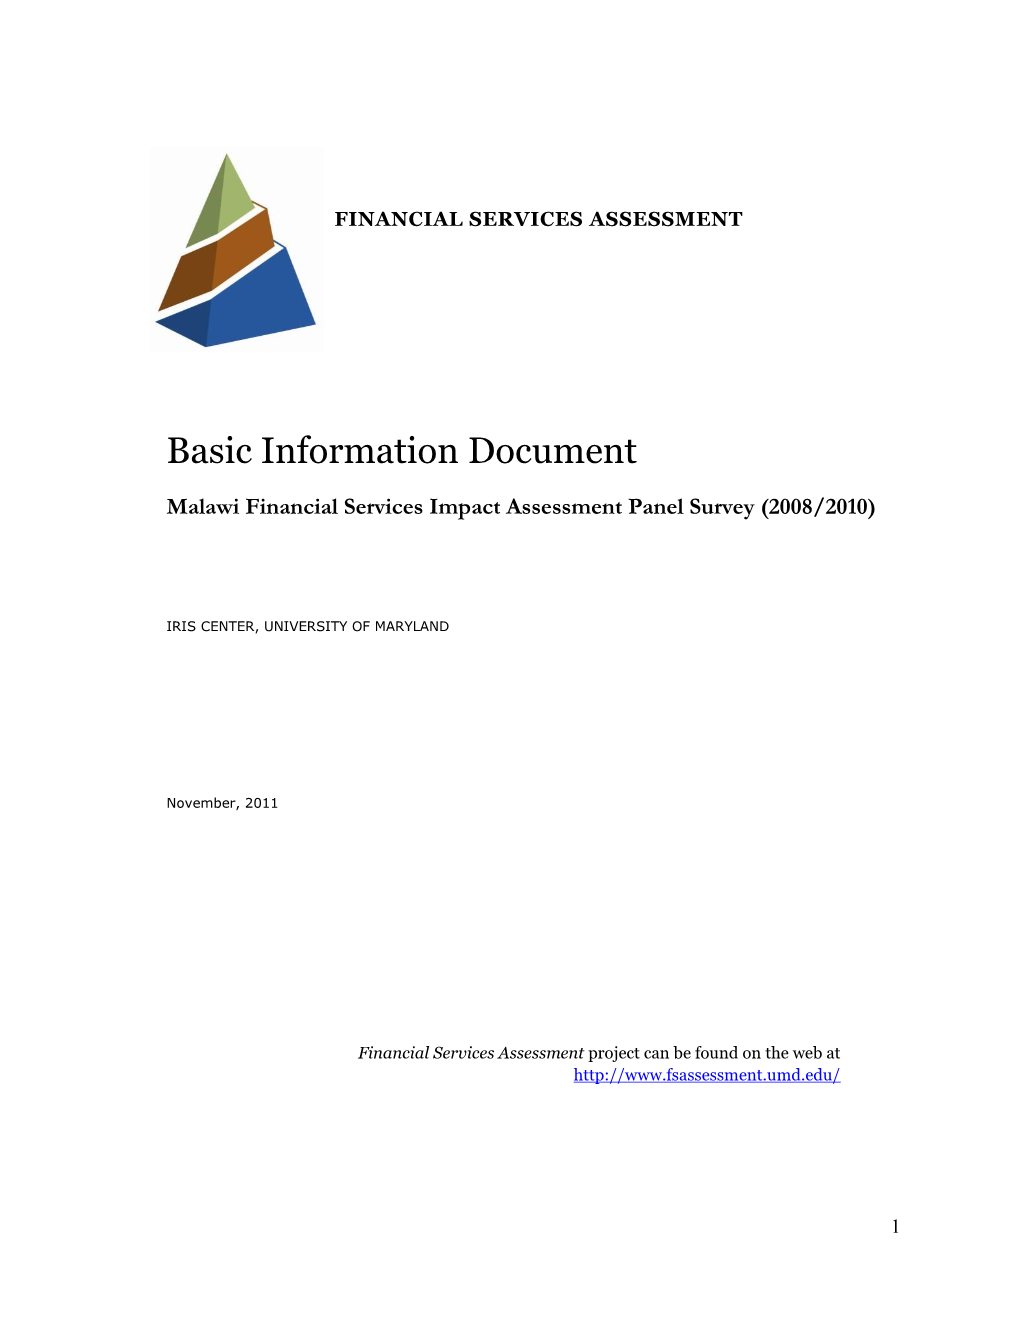 Basic Information Document